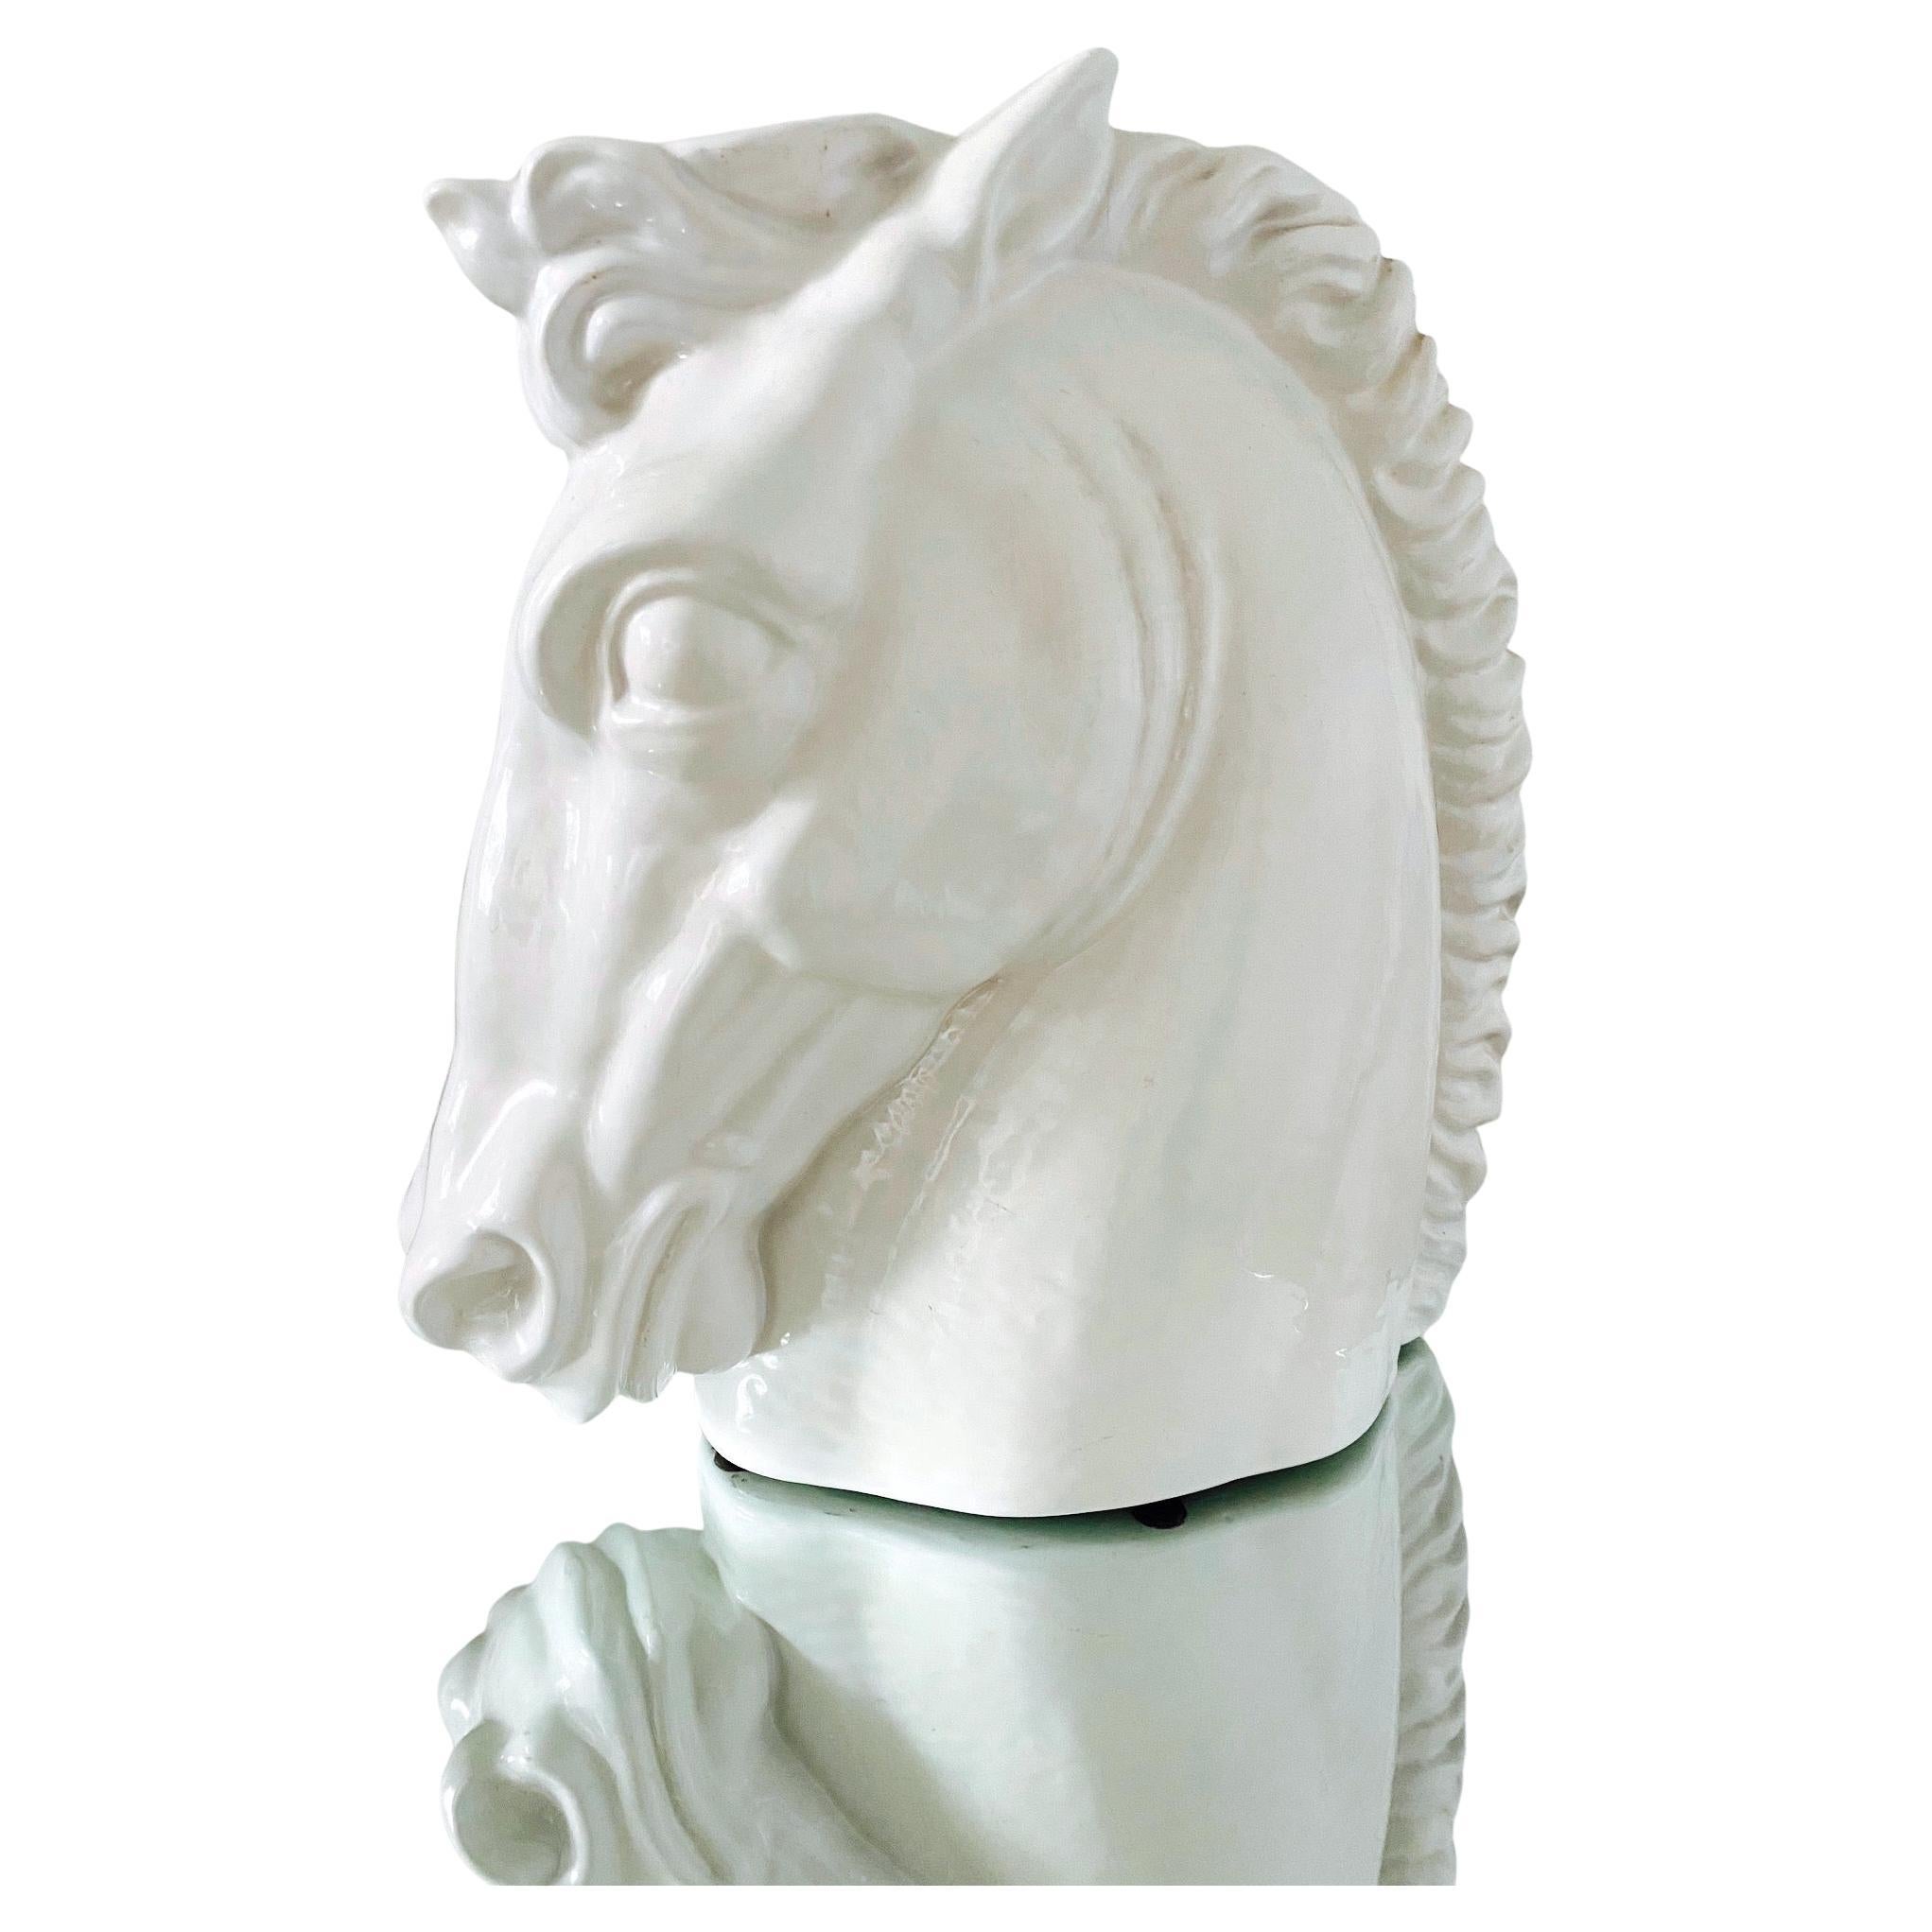 Italian Mid-Century Modern Ceramic Roman Horse Sculpture in White, circa 1970s